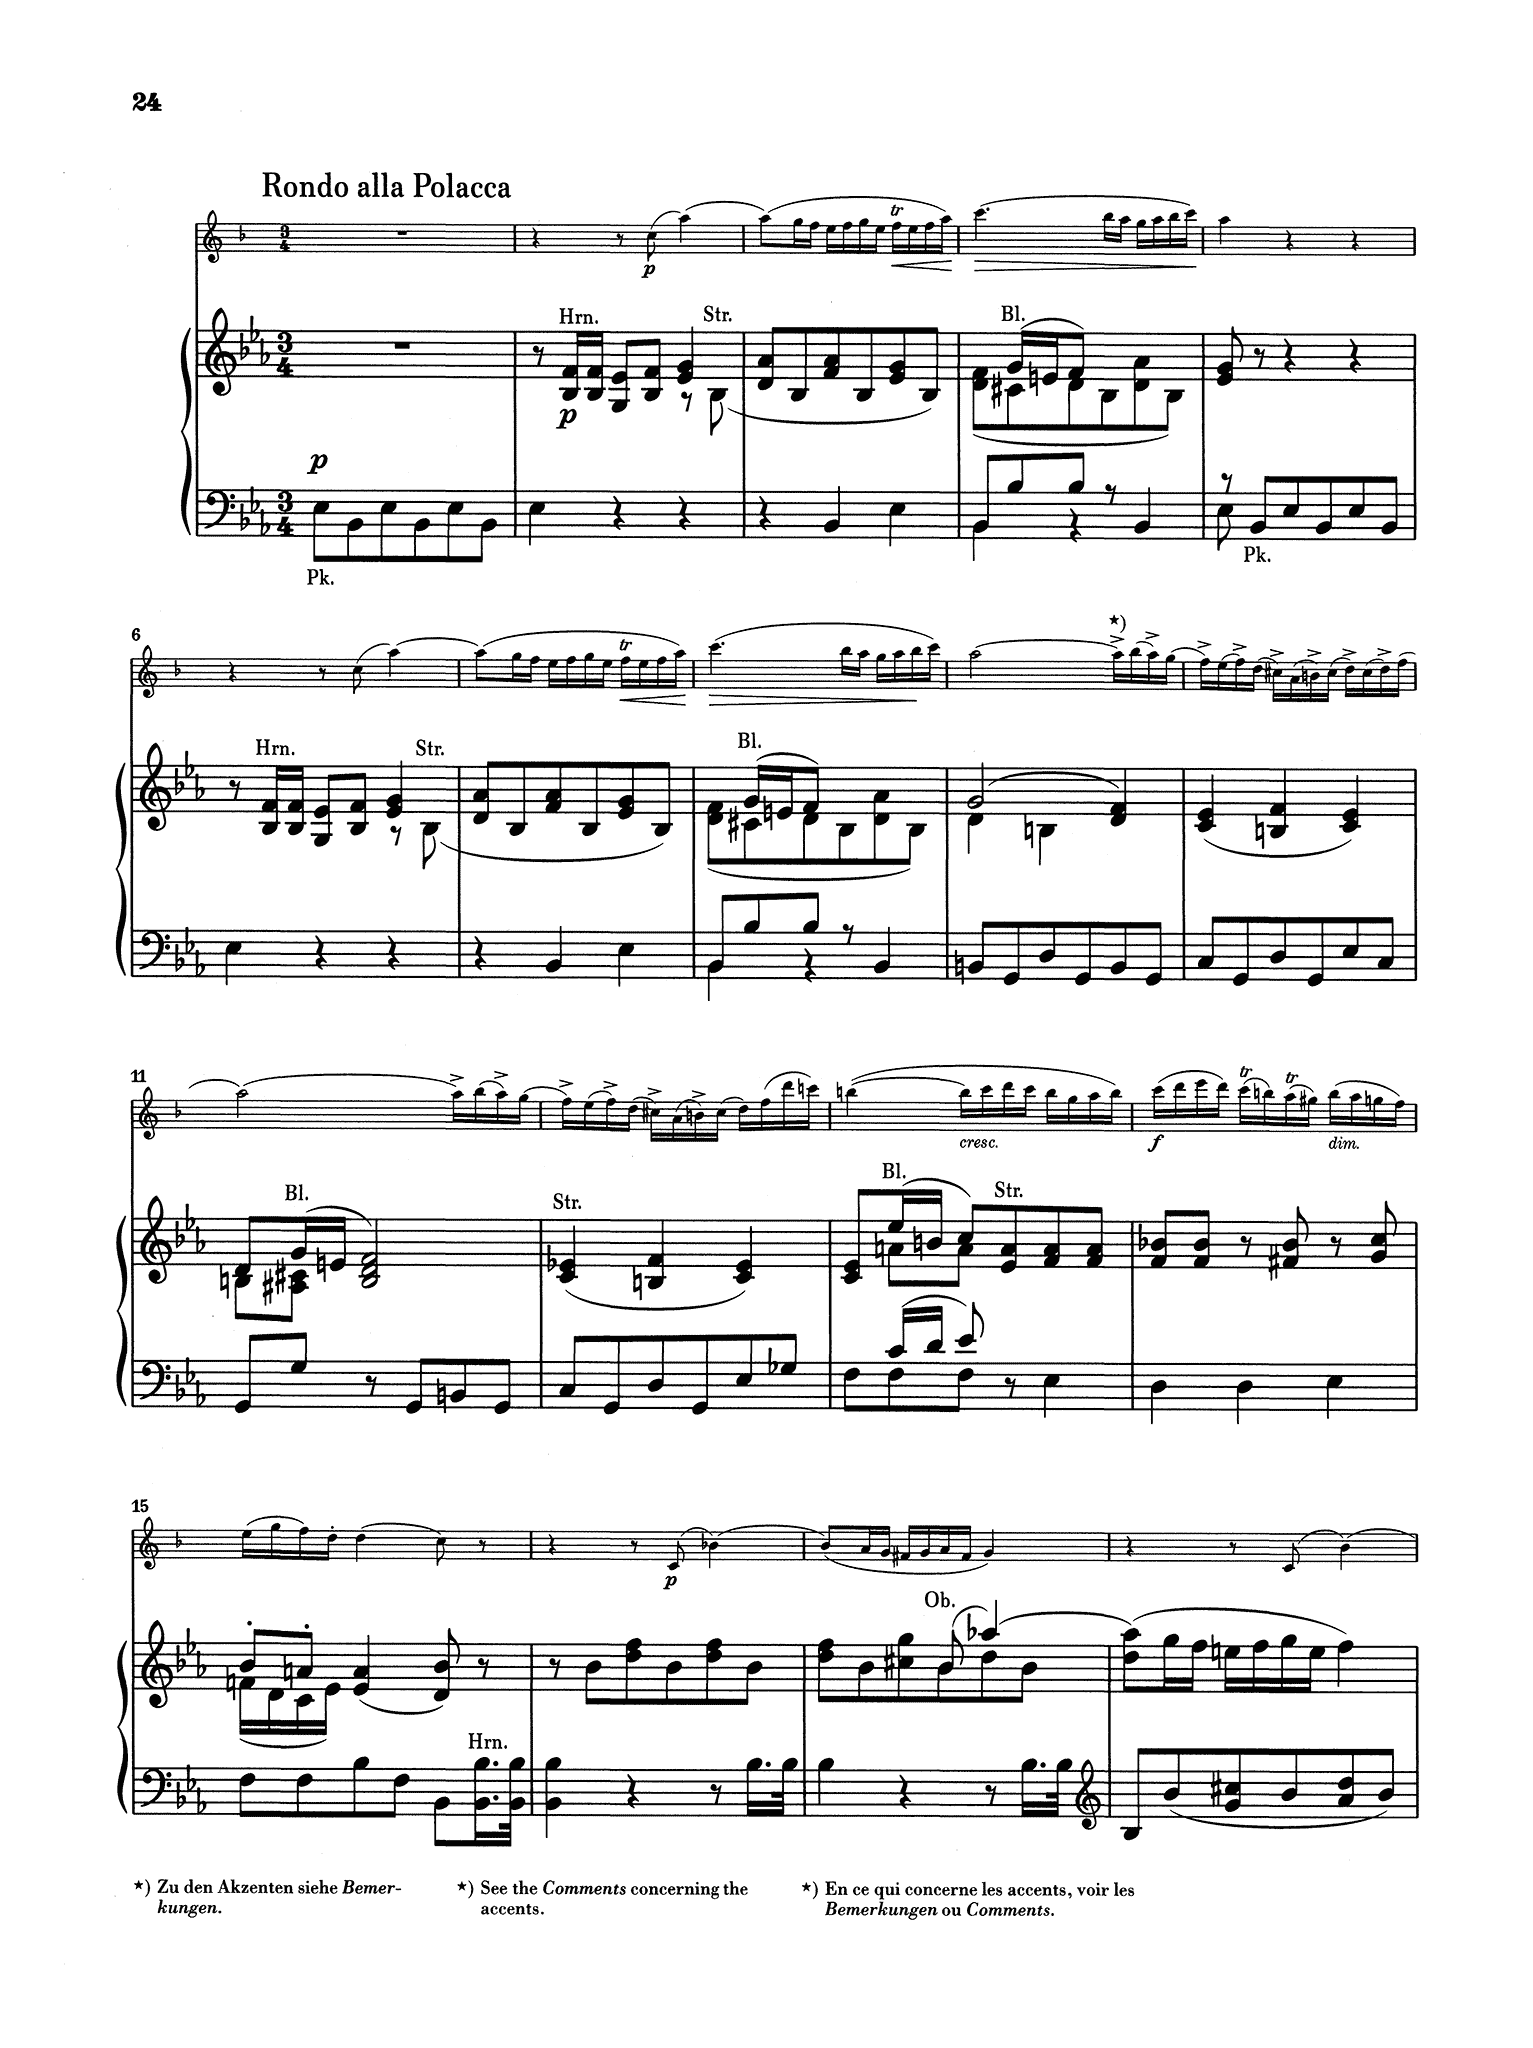 Clarinet Concerto No. 2 in E-flat Major, Op. 57 - Movement 3